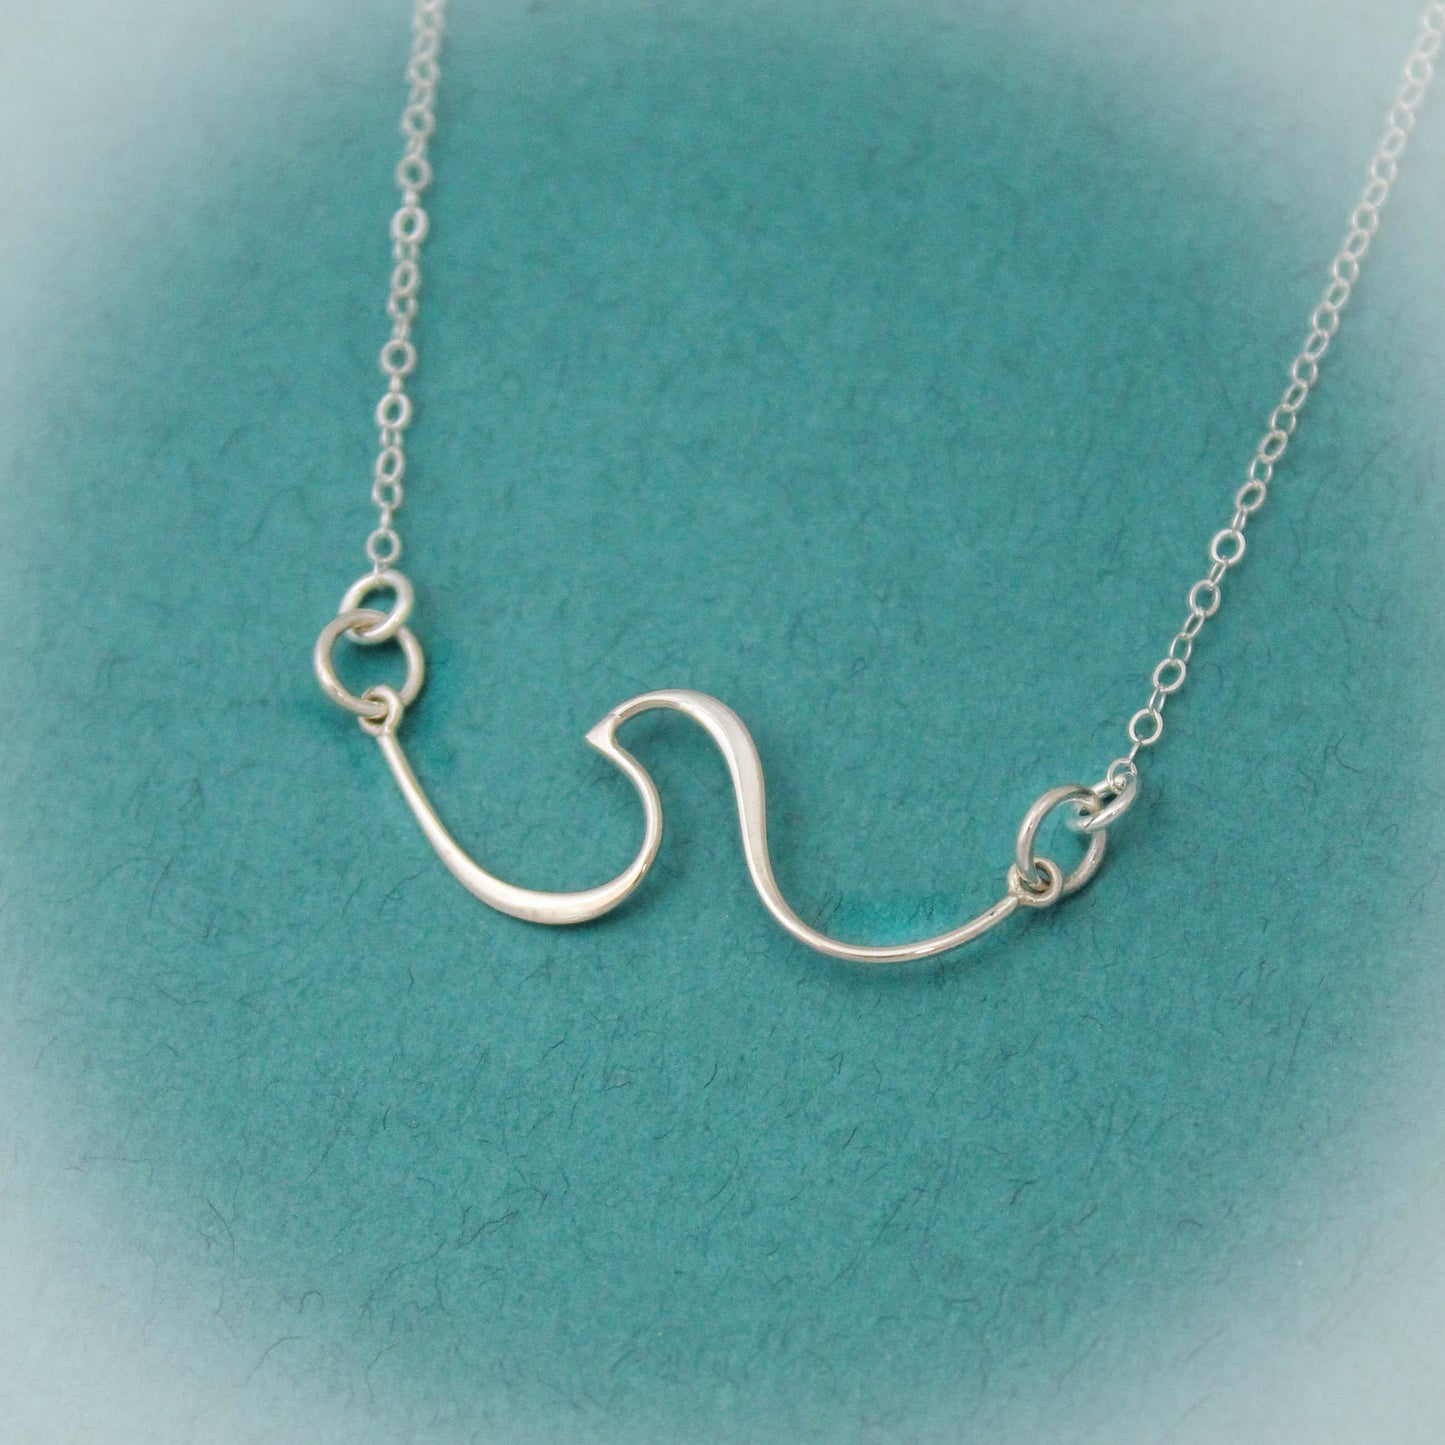 Minimalist Wave Necklace, Sterling Silver Ocean Wave Necklace, Make Waves Jewelry, Wave Bar Necklace, Sterling Silver Beach Bar Necklace